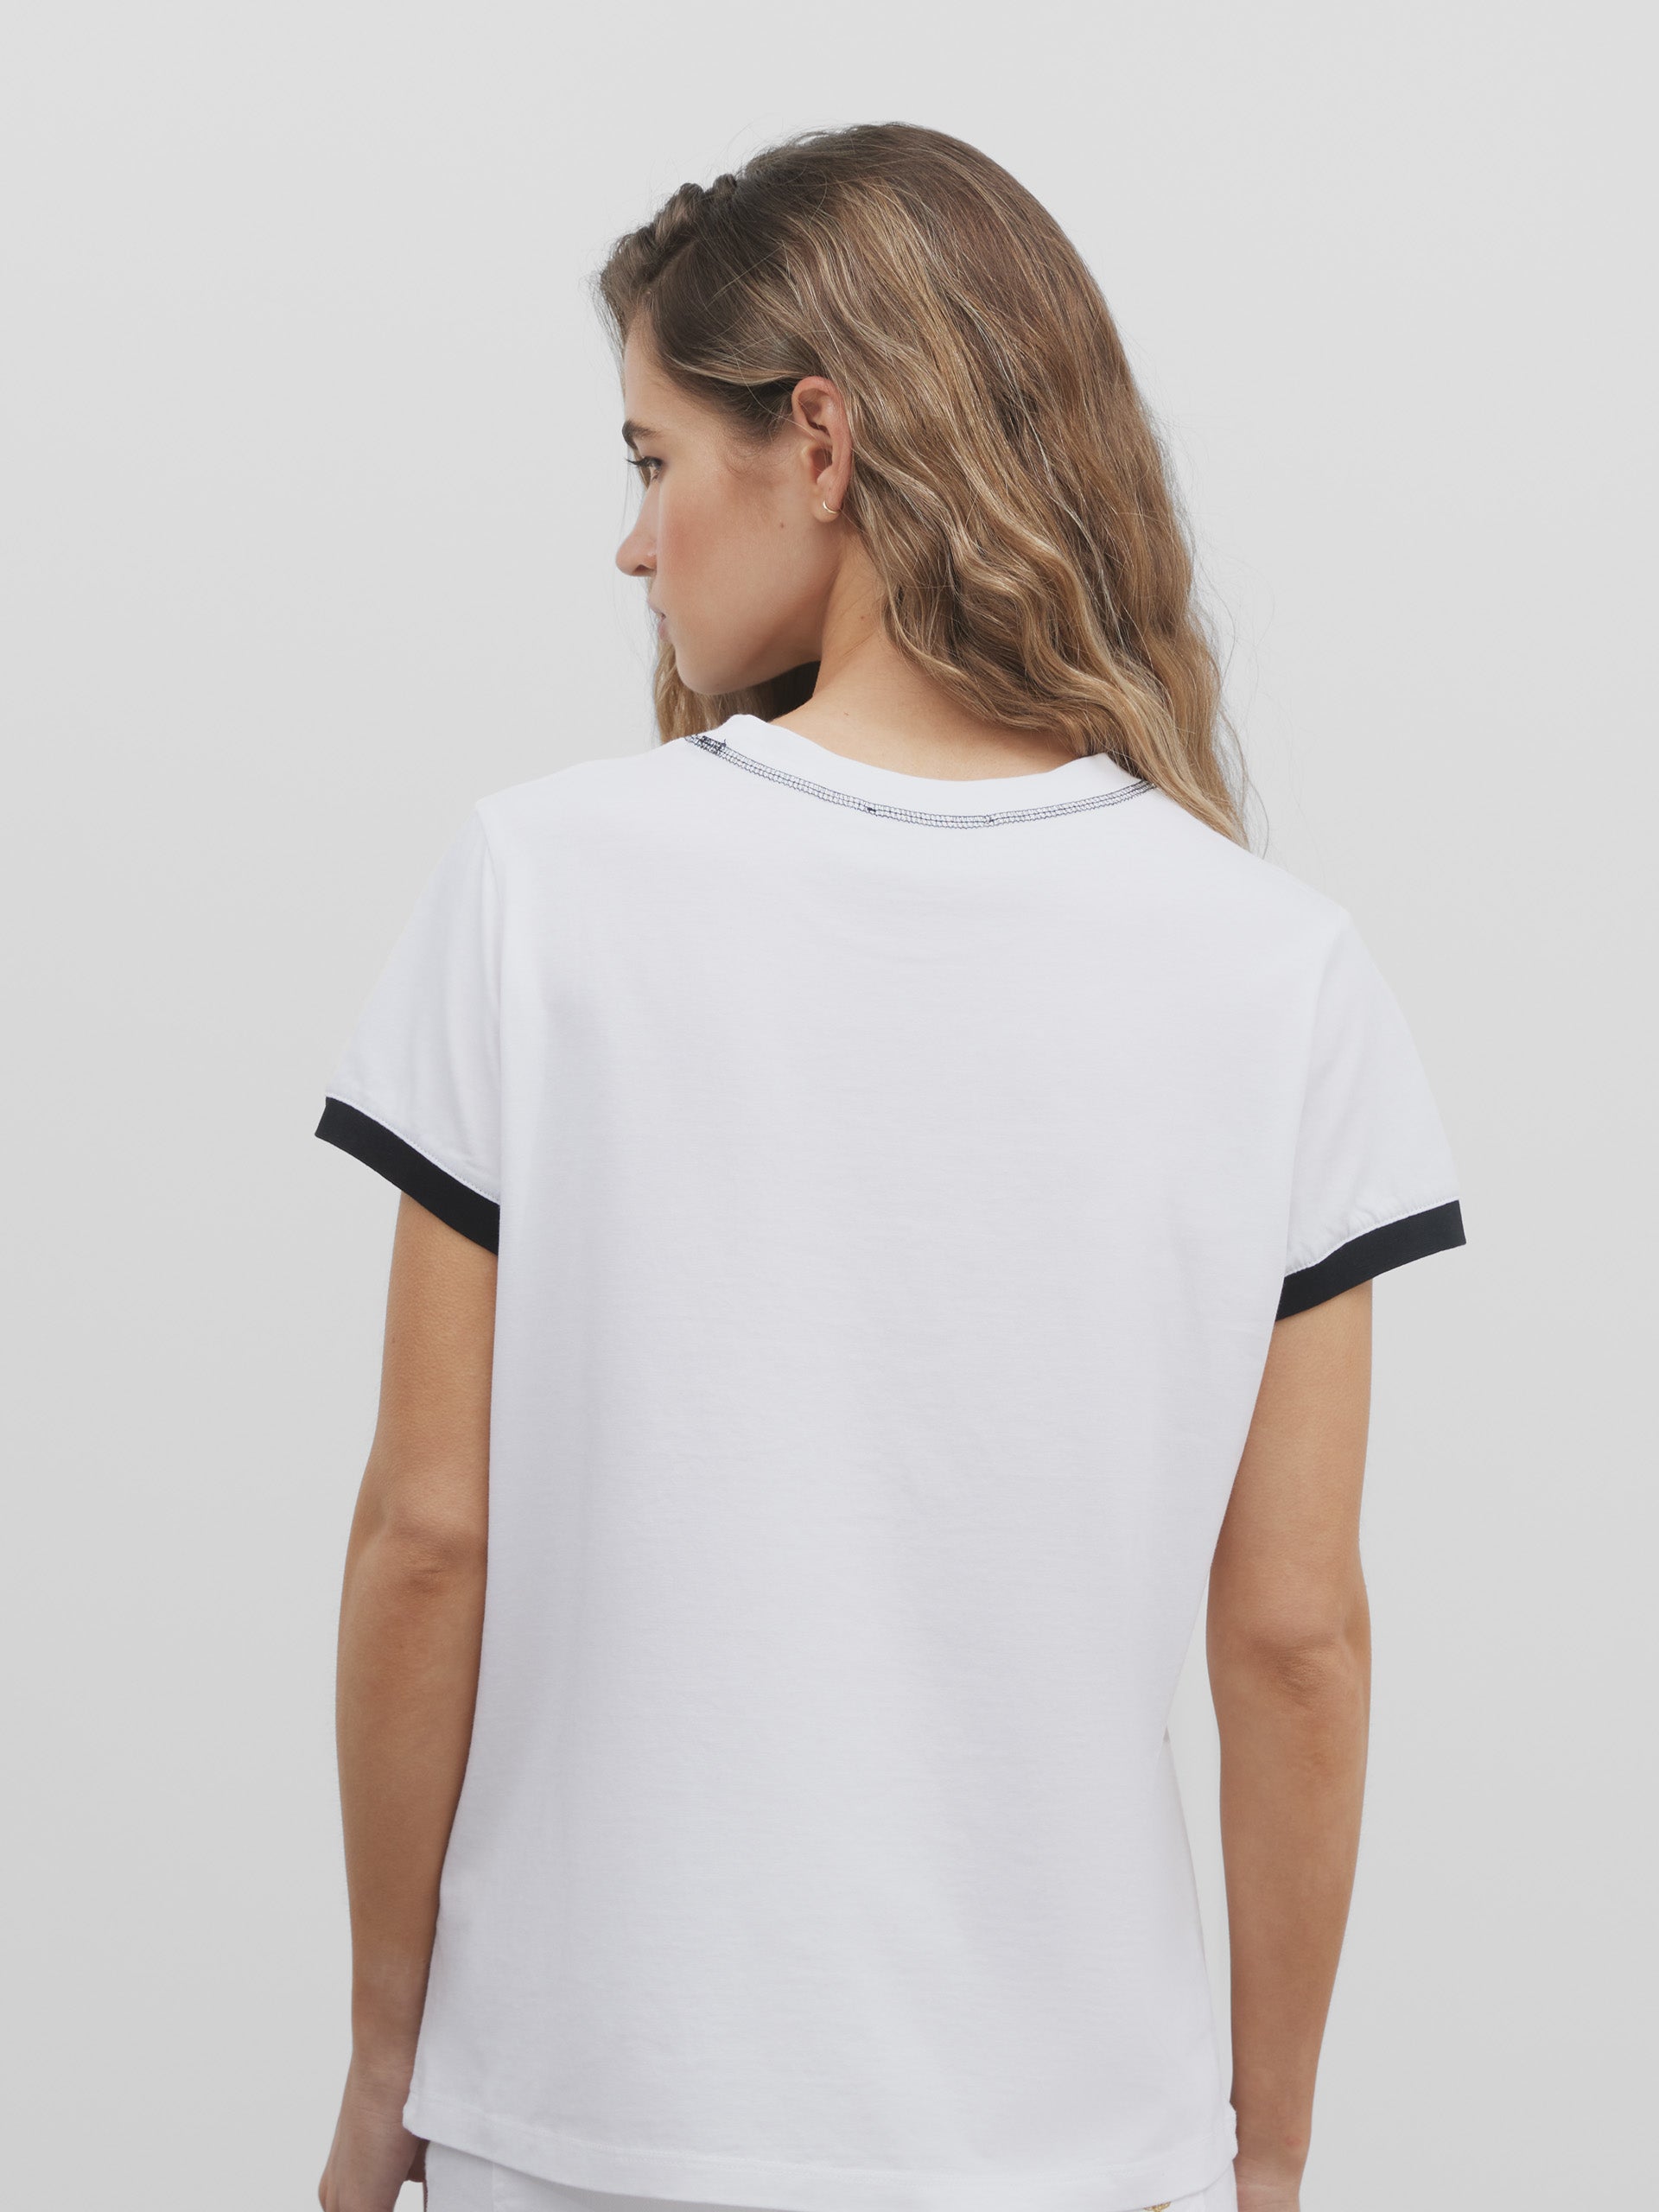 Camiseta woman silbon retro blanca